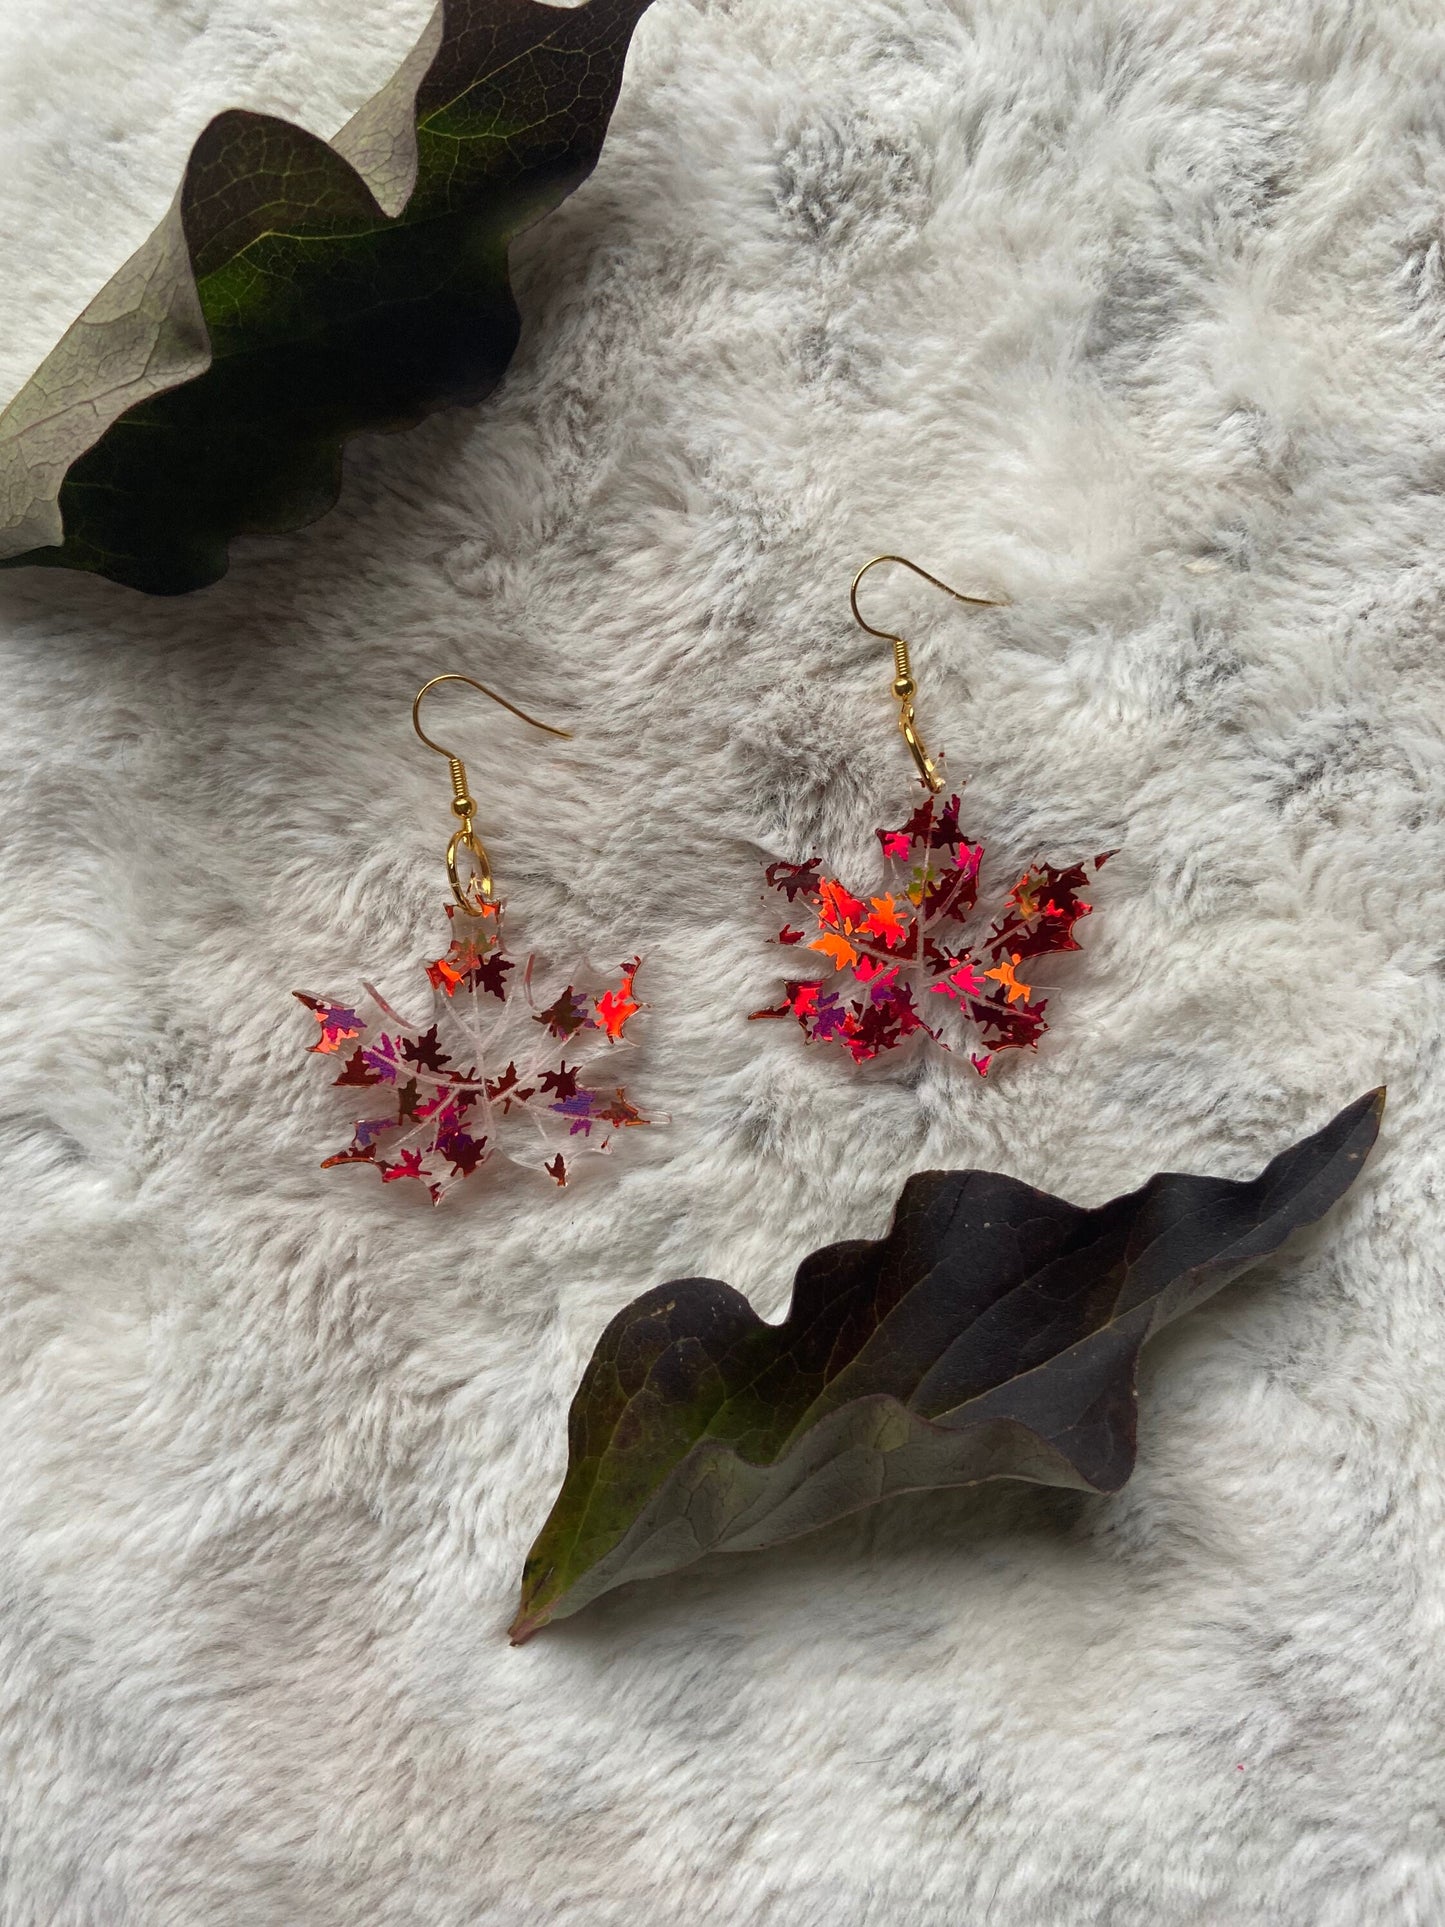 Maple Leaf Earrings in fall leaves